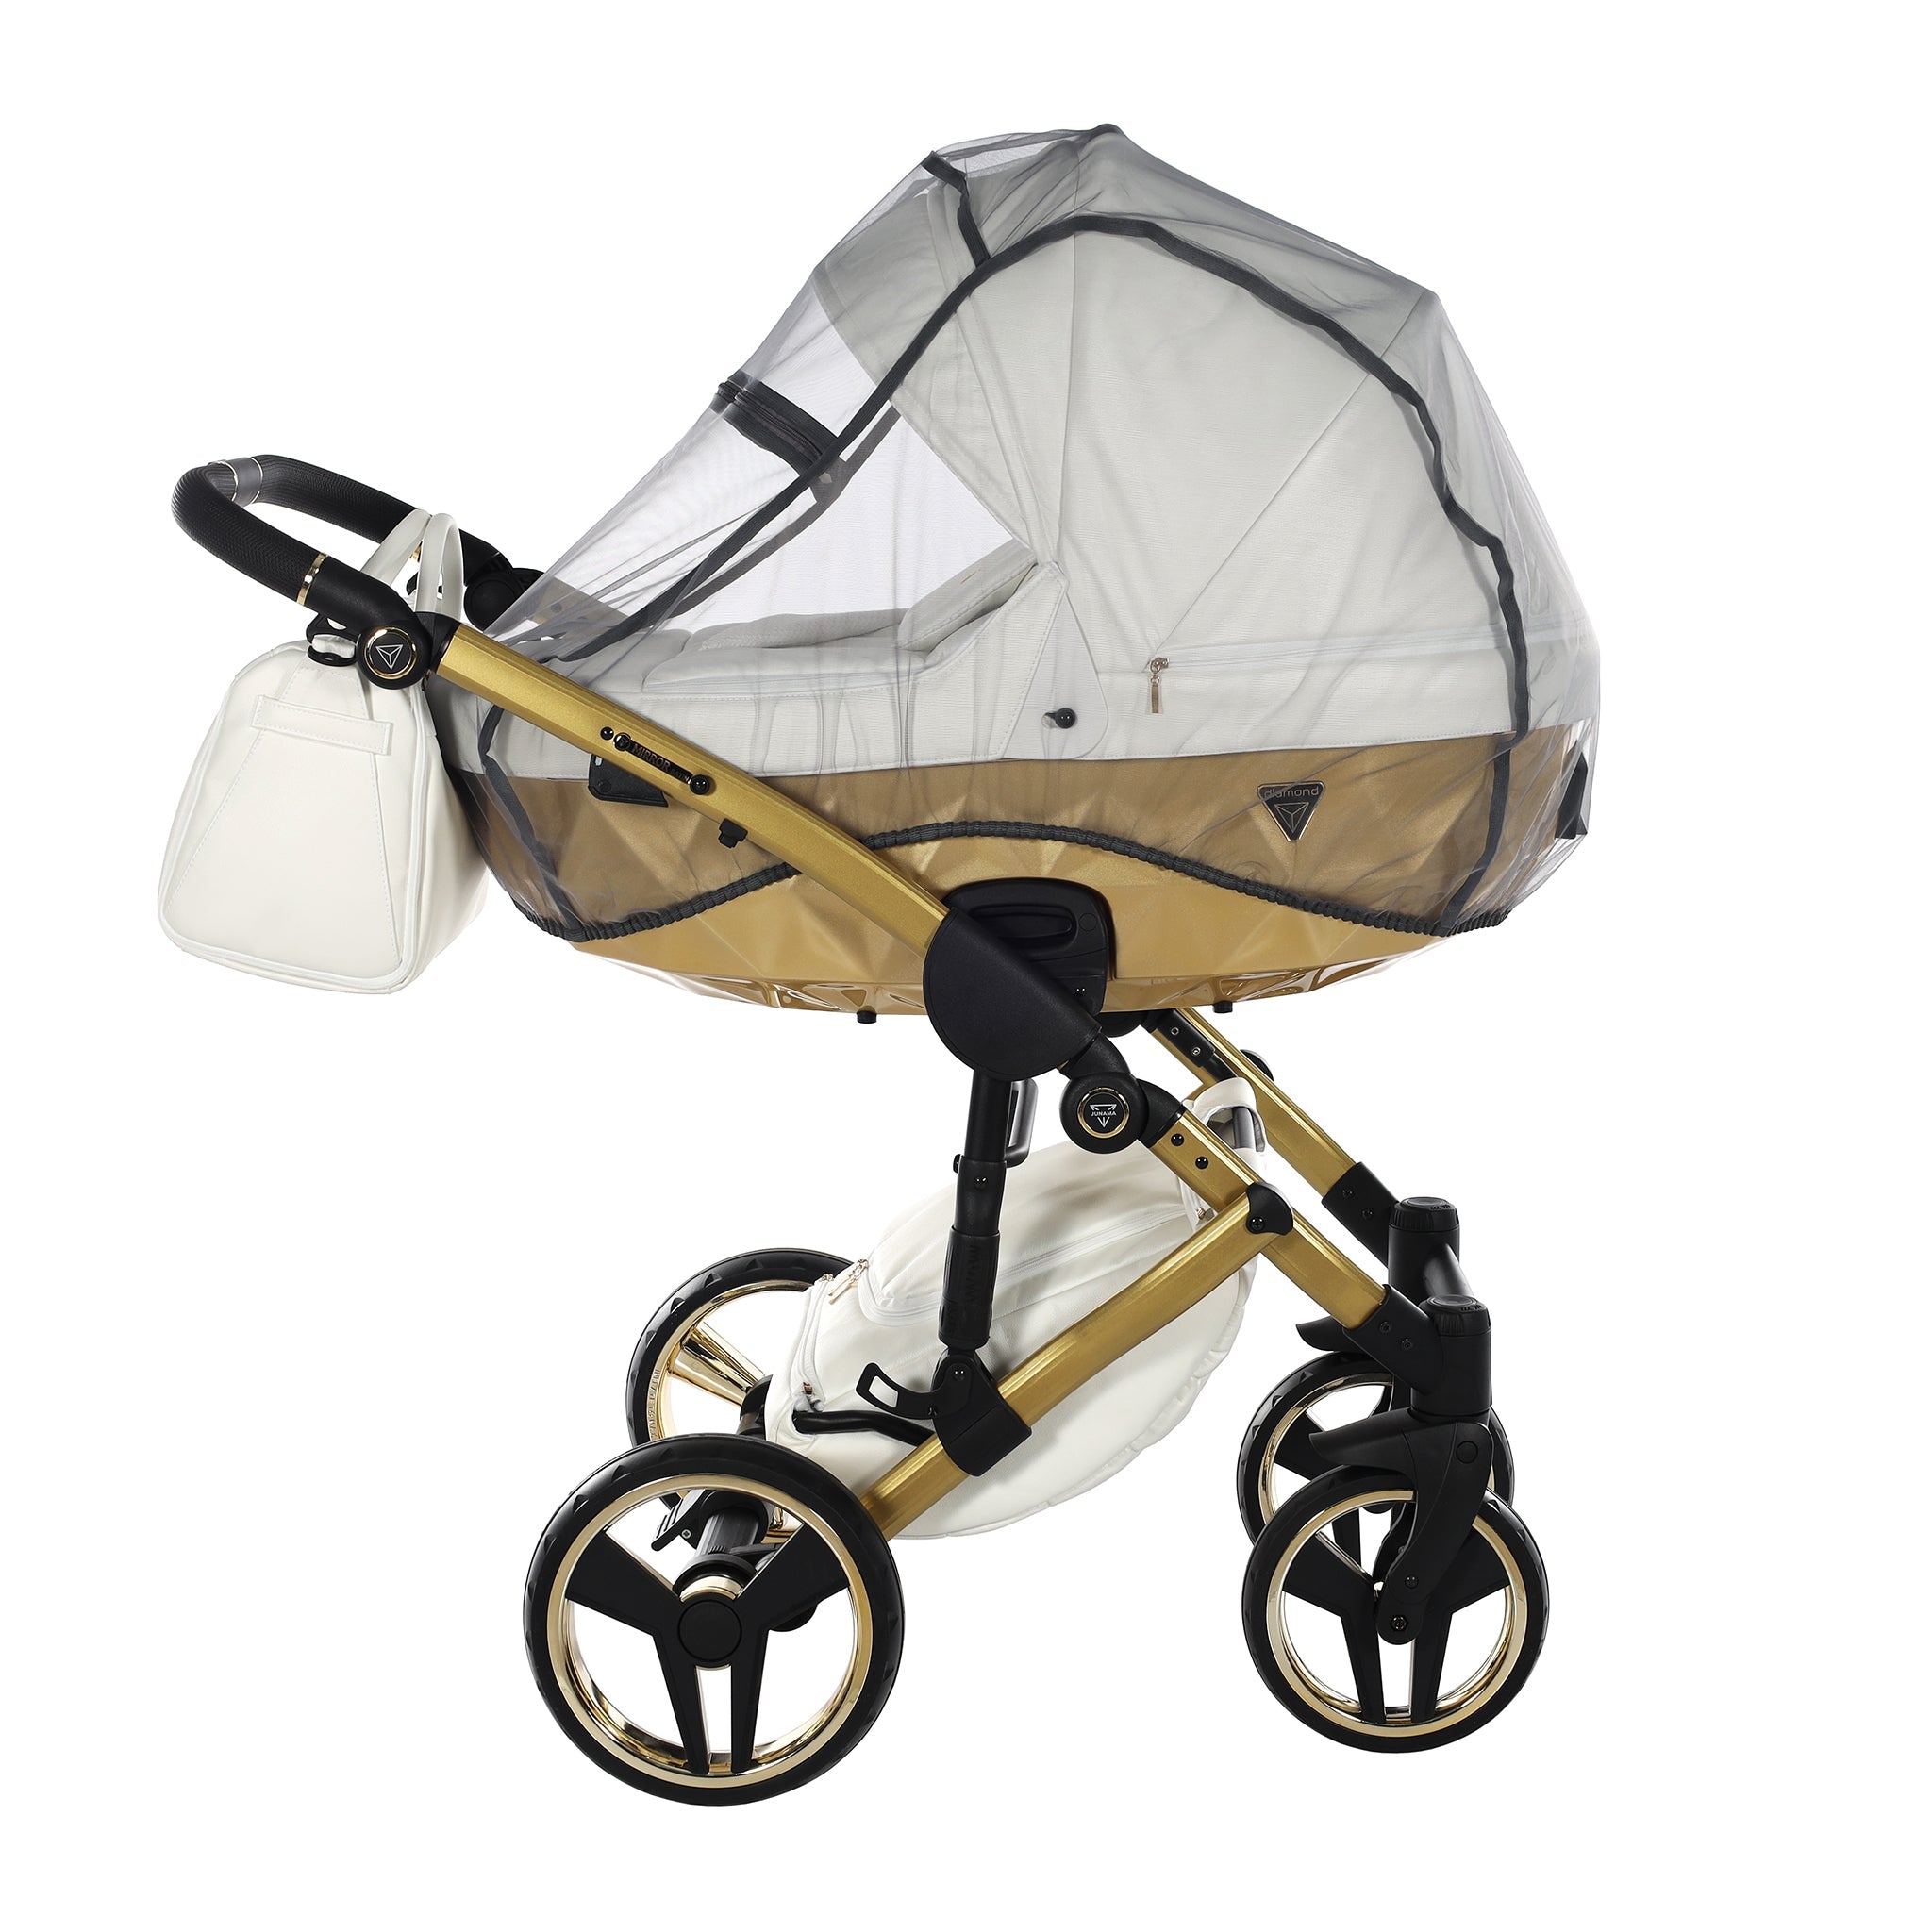 Junama Mirror Satin, baby prams or stroller 2 in 1 - Gold, Code number: JUNMSAT06